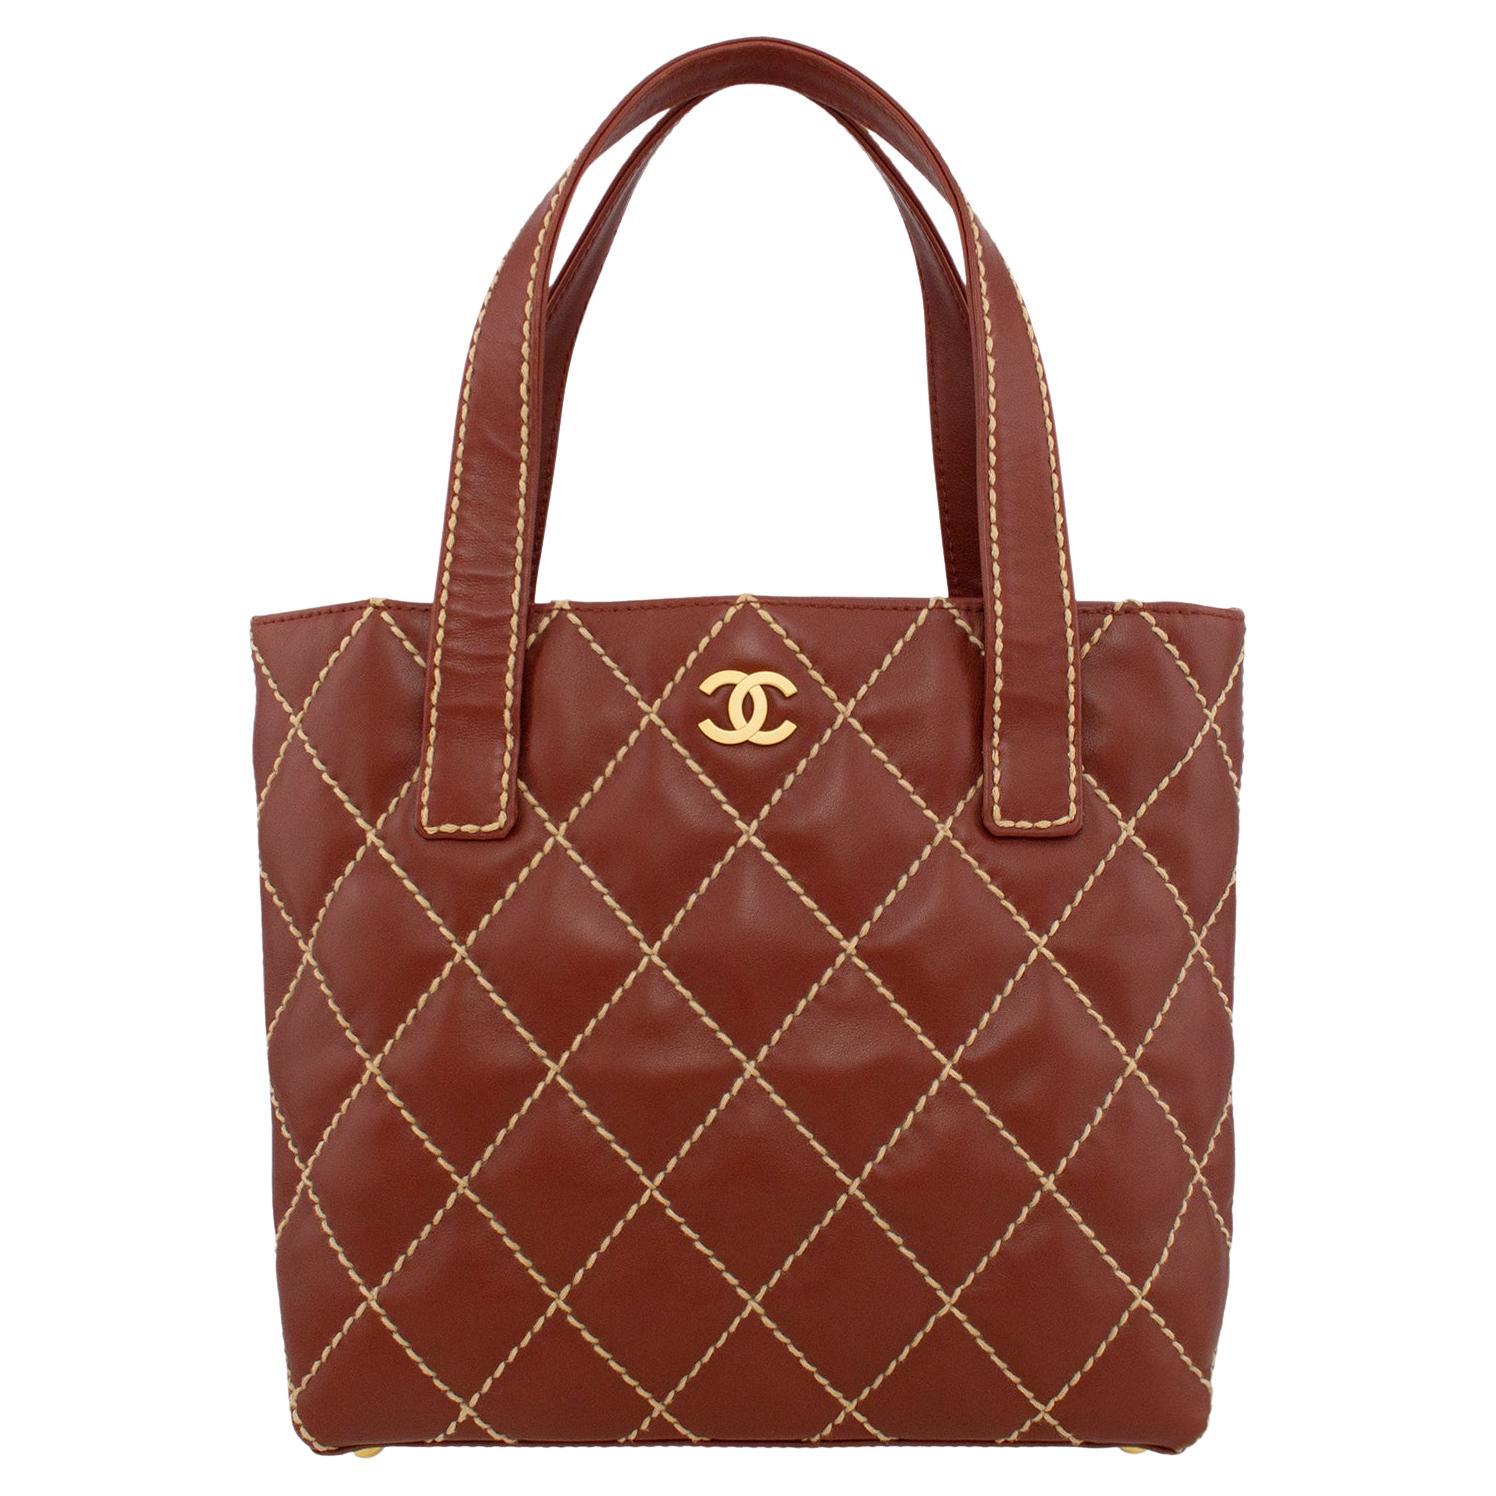 Authentic Chanel Dust Bag 5.75 x 5.25